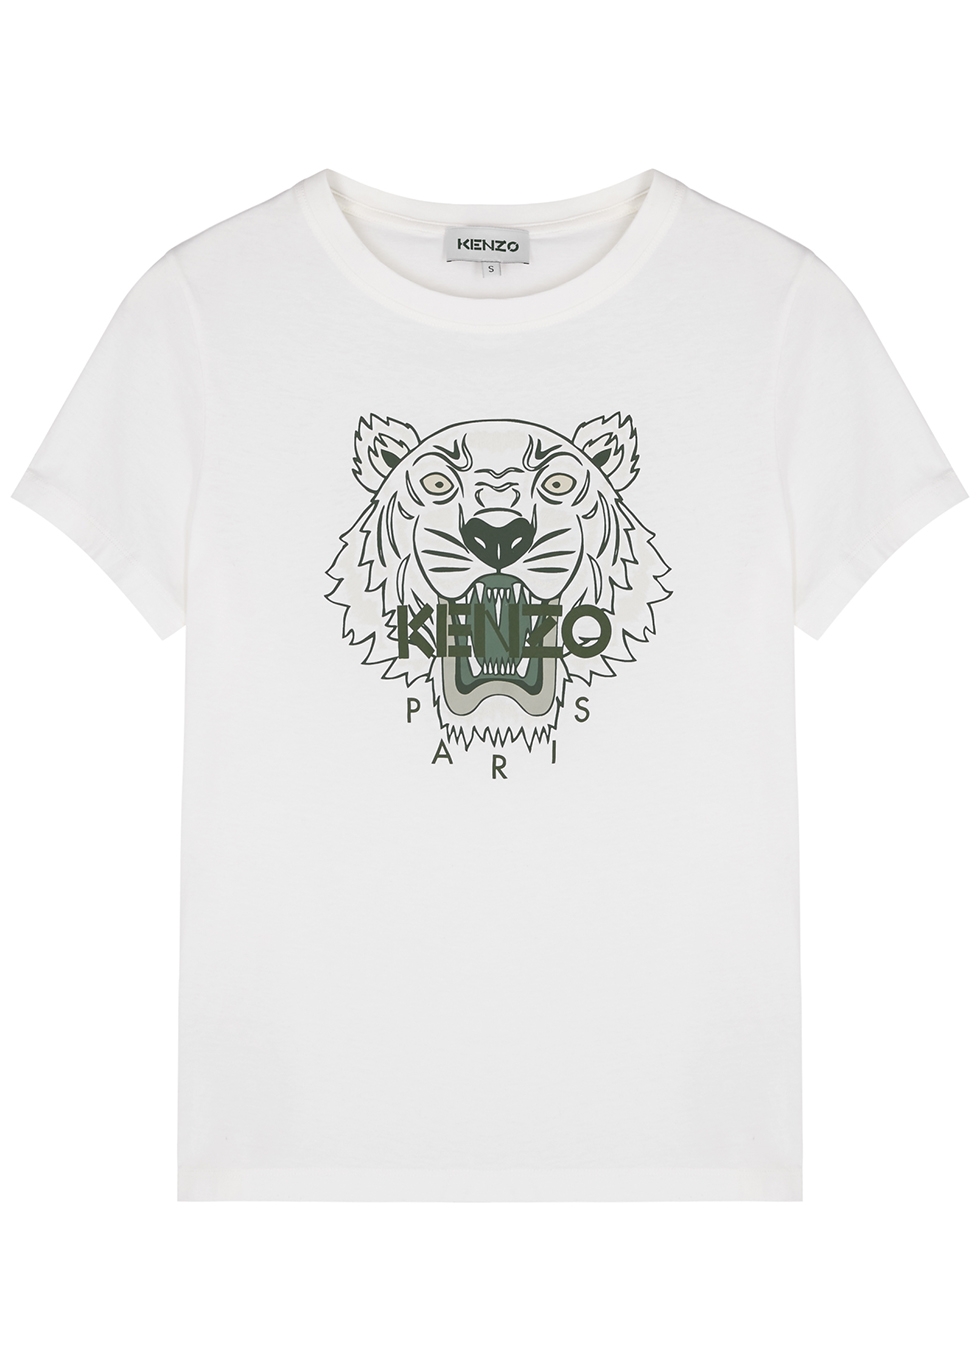 kenzo t shirt white tiger